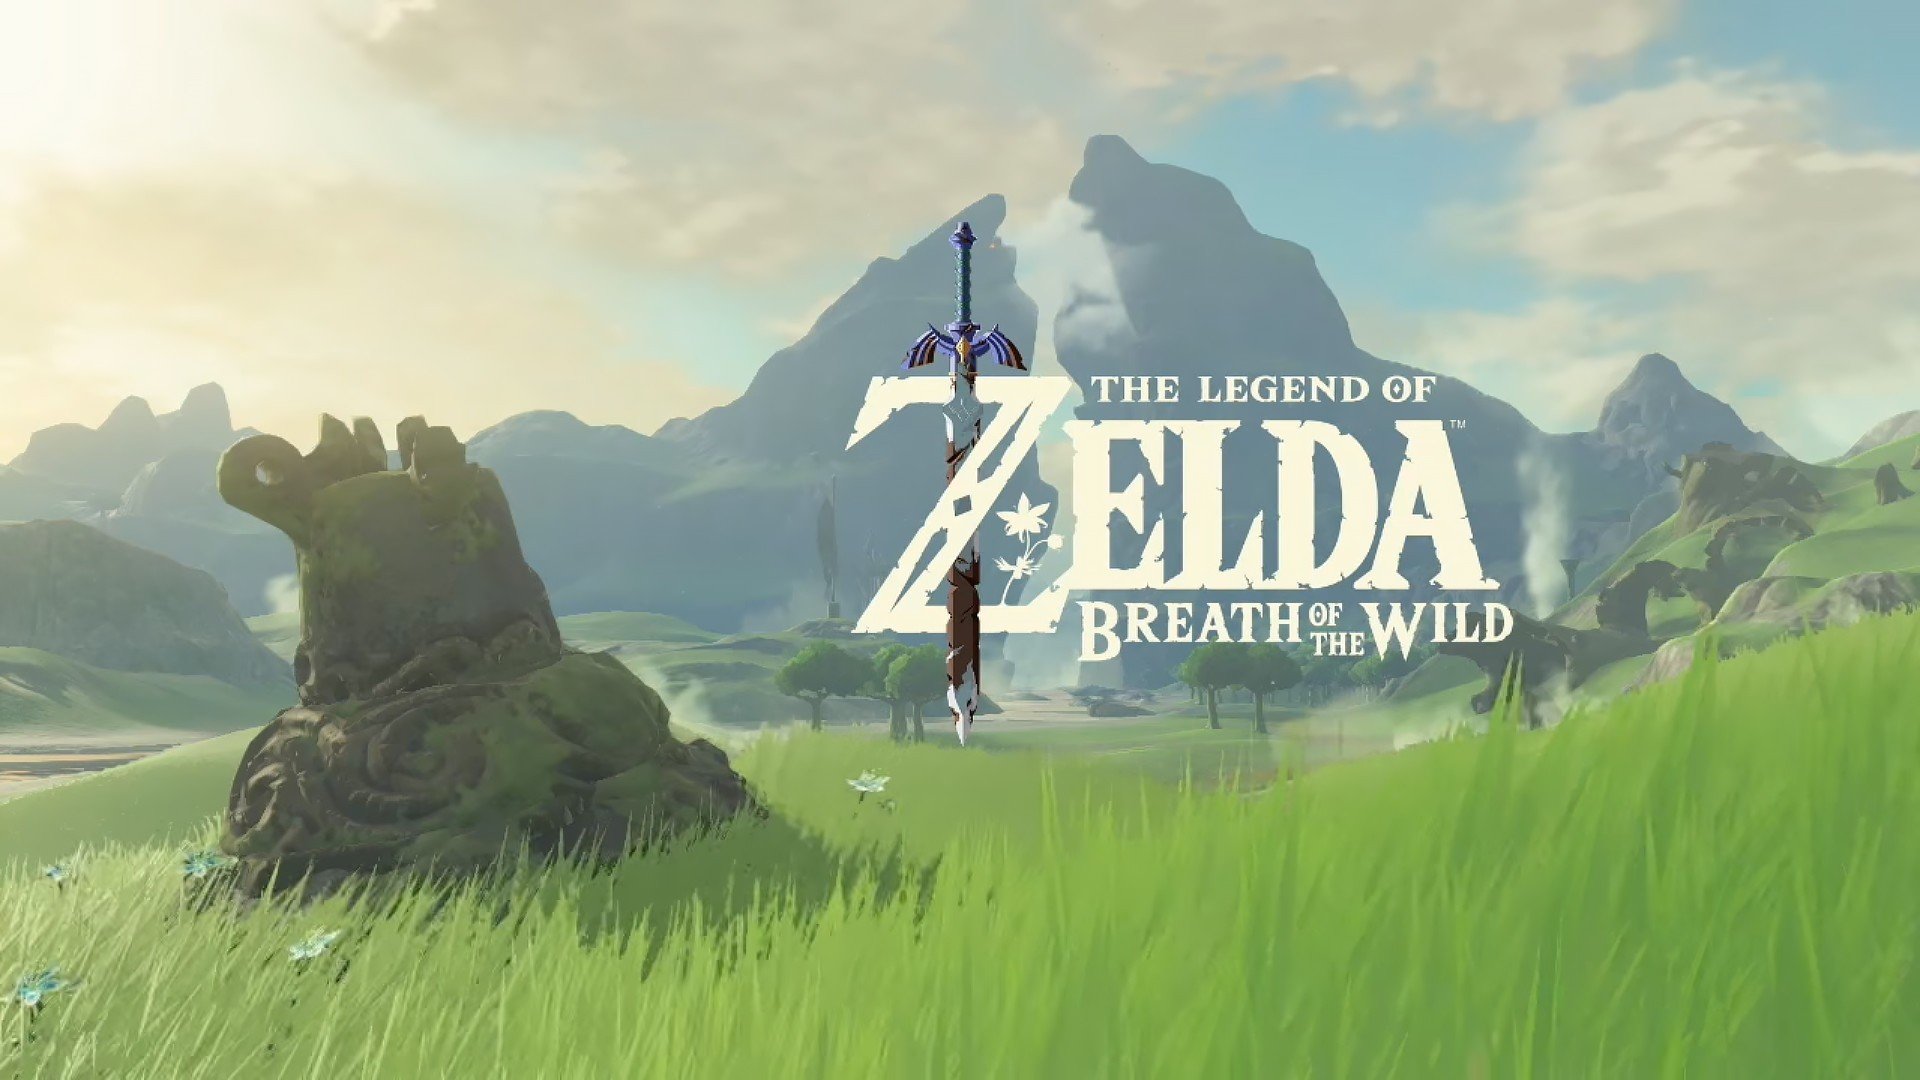 Free download The Legend Of Zelda: Breath Of The Wild wallpaper ID:111485 full hd 1080p for desktop